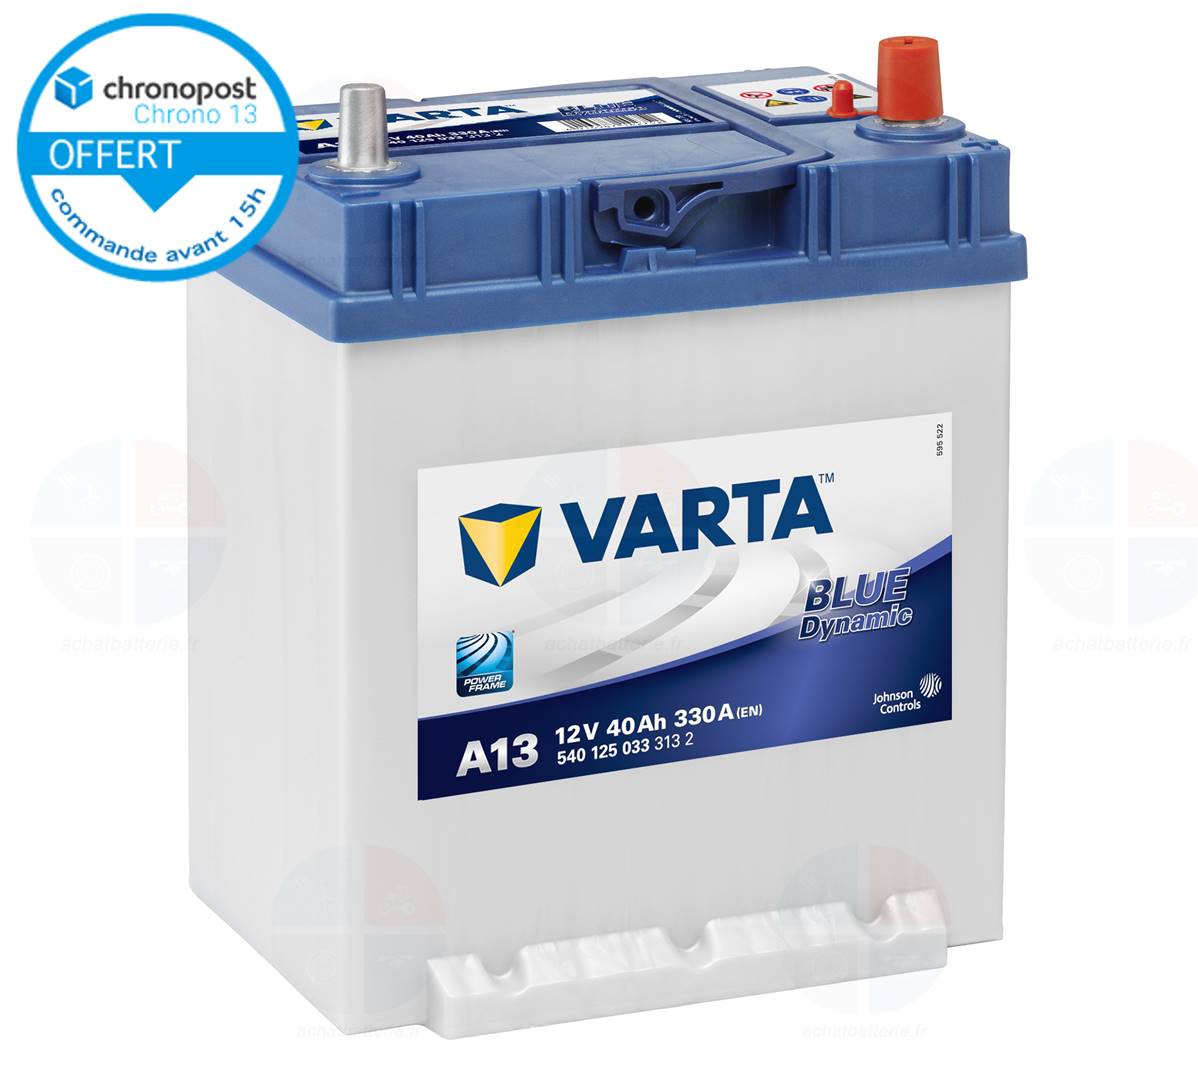 Varta E23. Batterie de voiture Varta 70Ah 12V